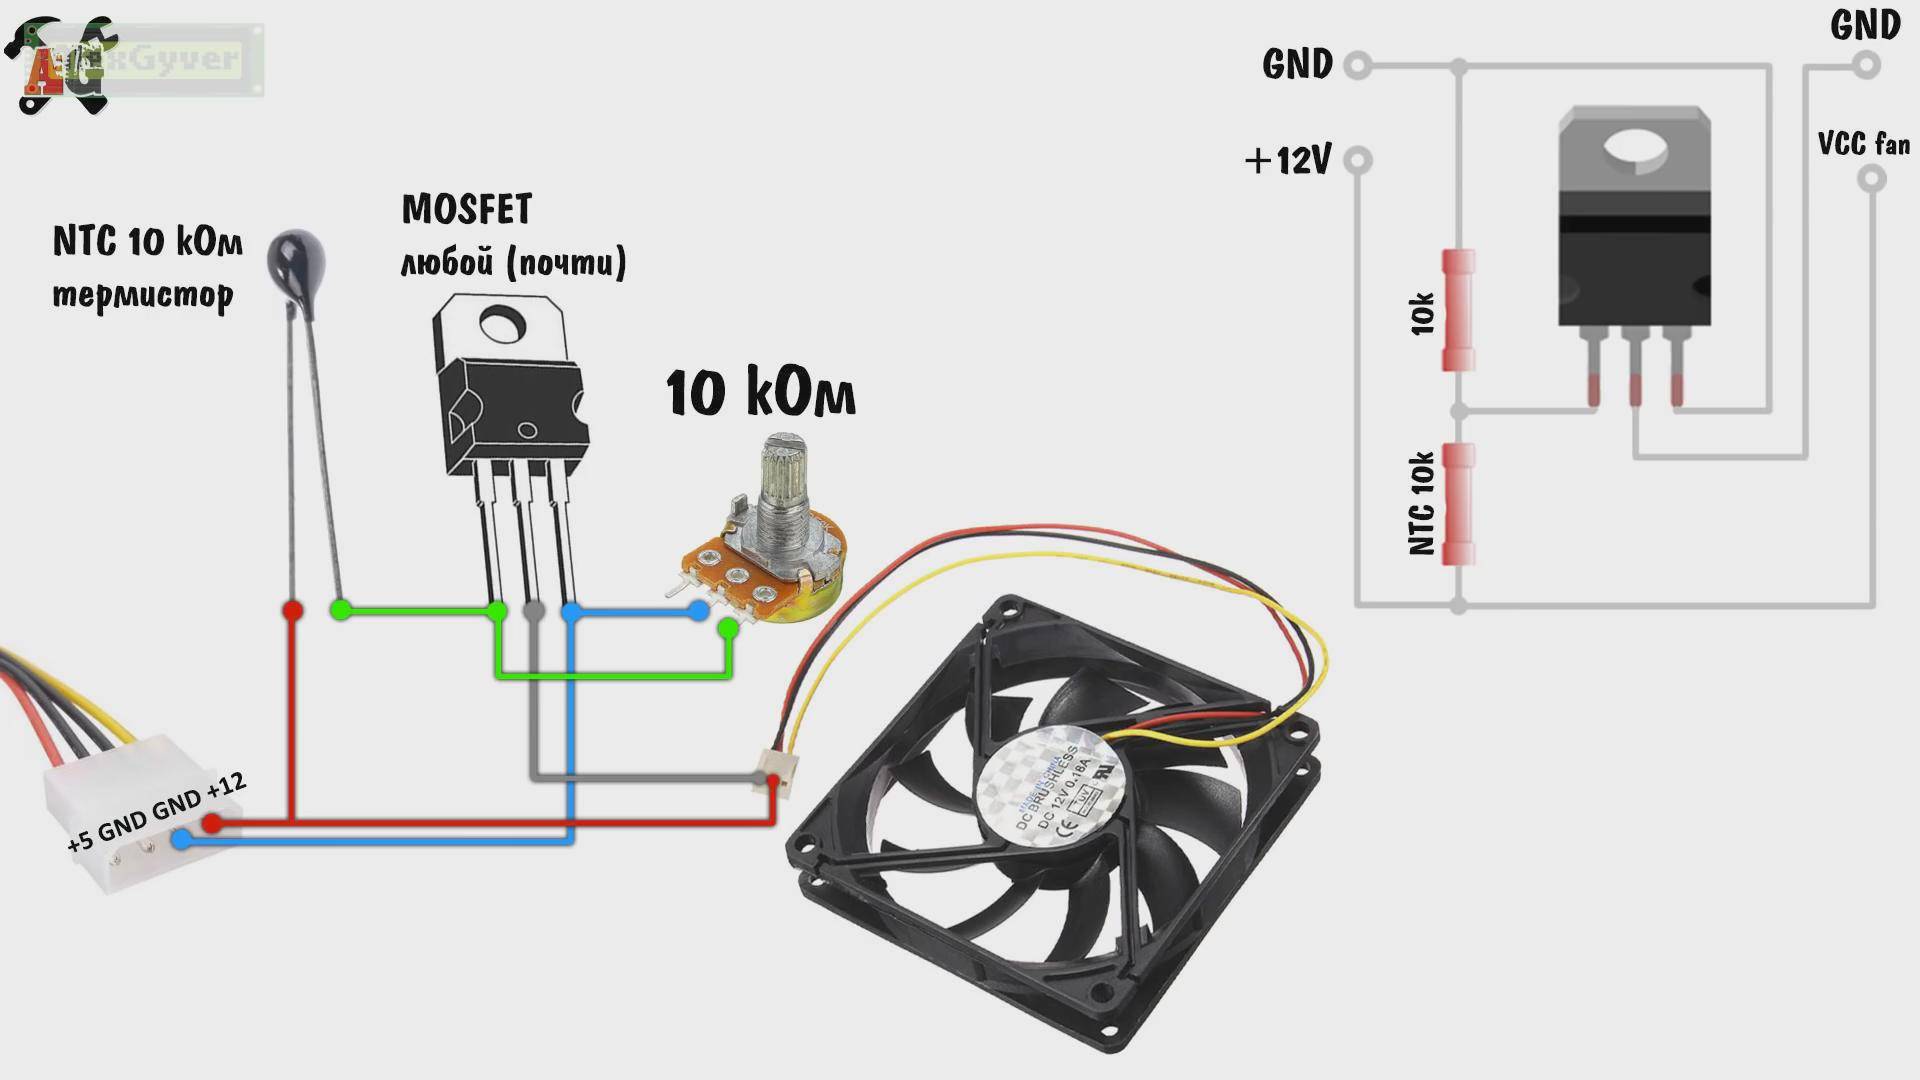 Как подключить регулятор скорости вентилятора своими руками - мега дом